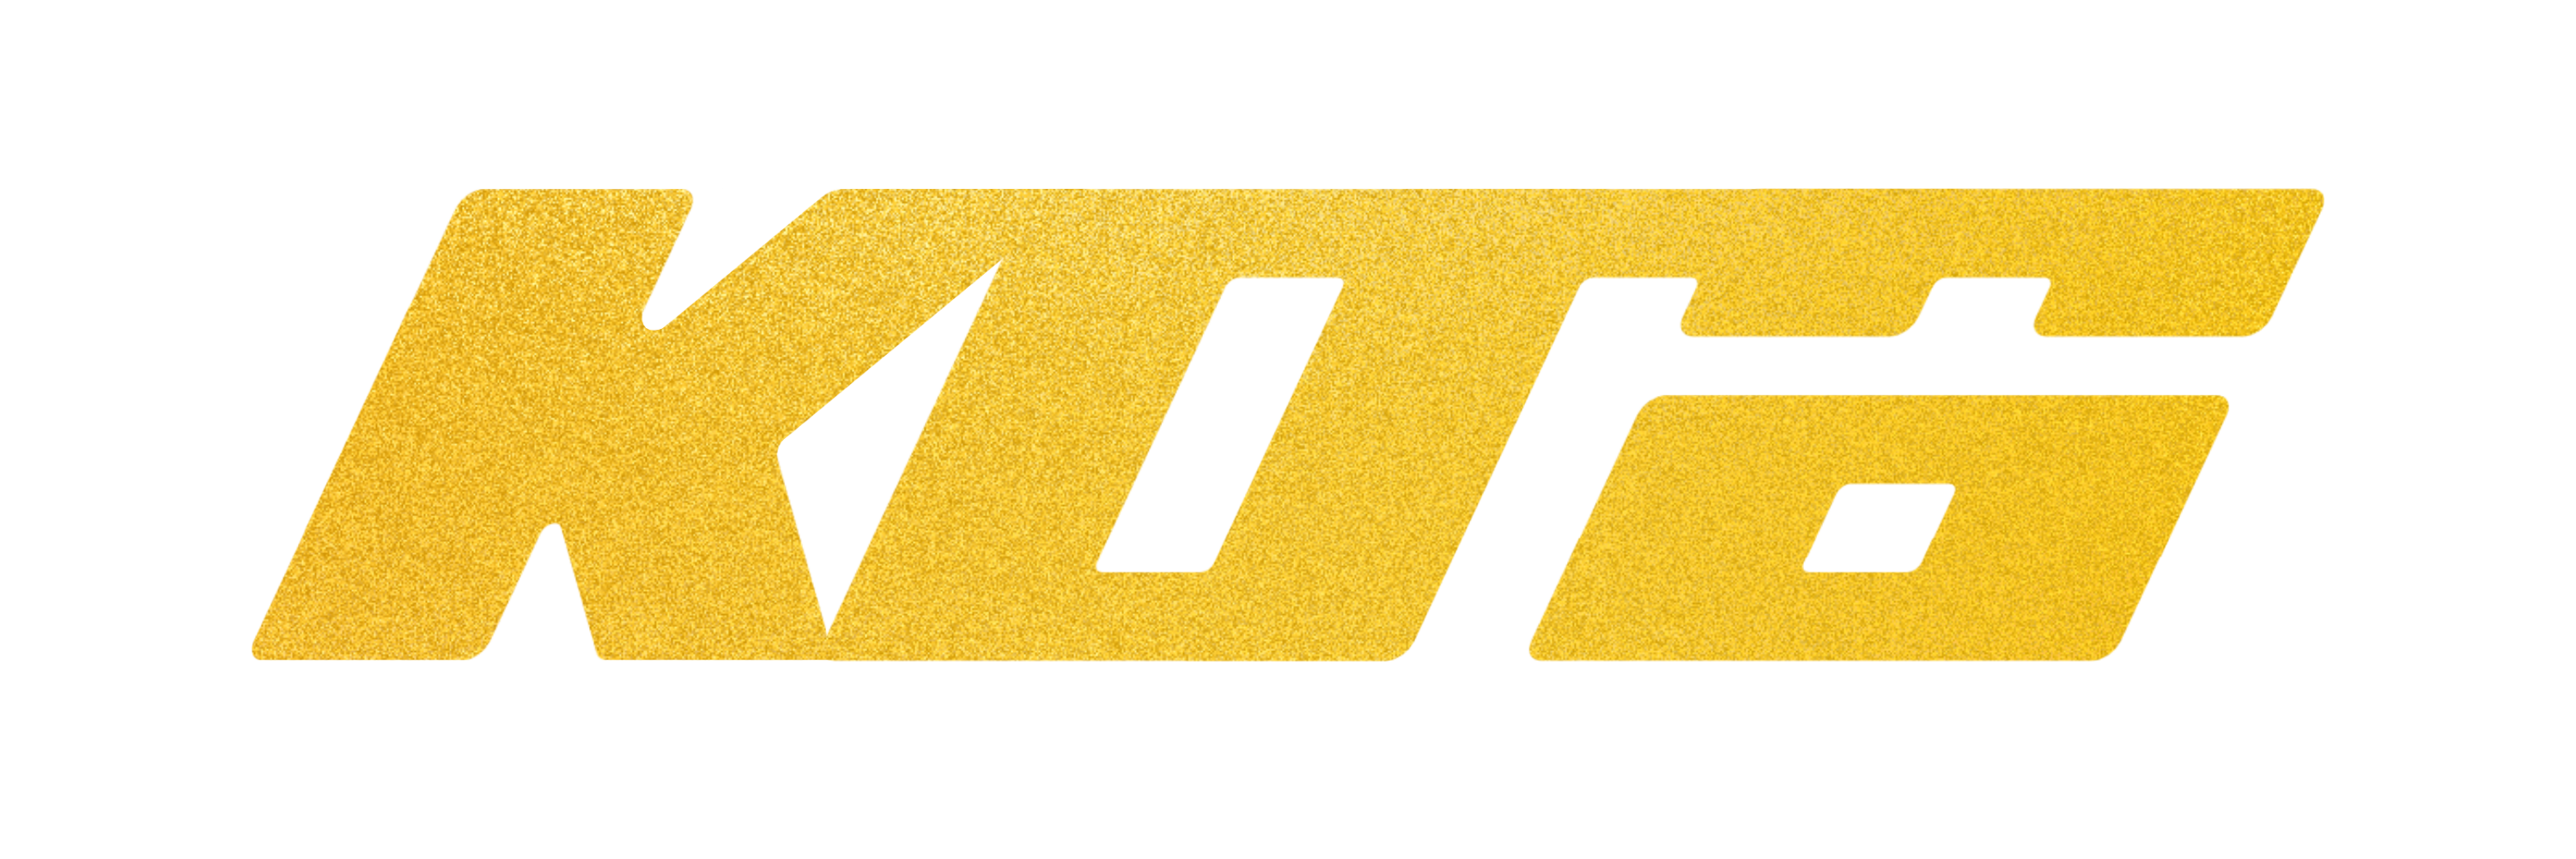 Korro logo